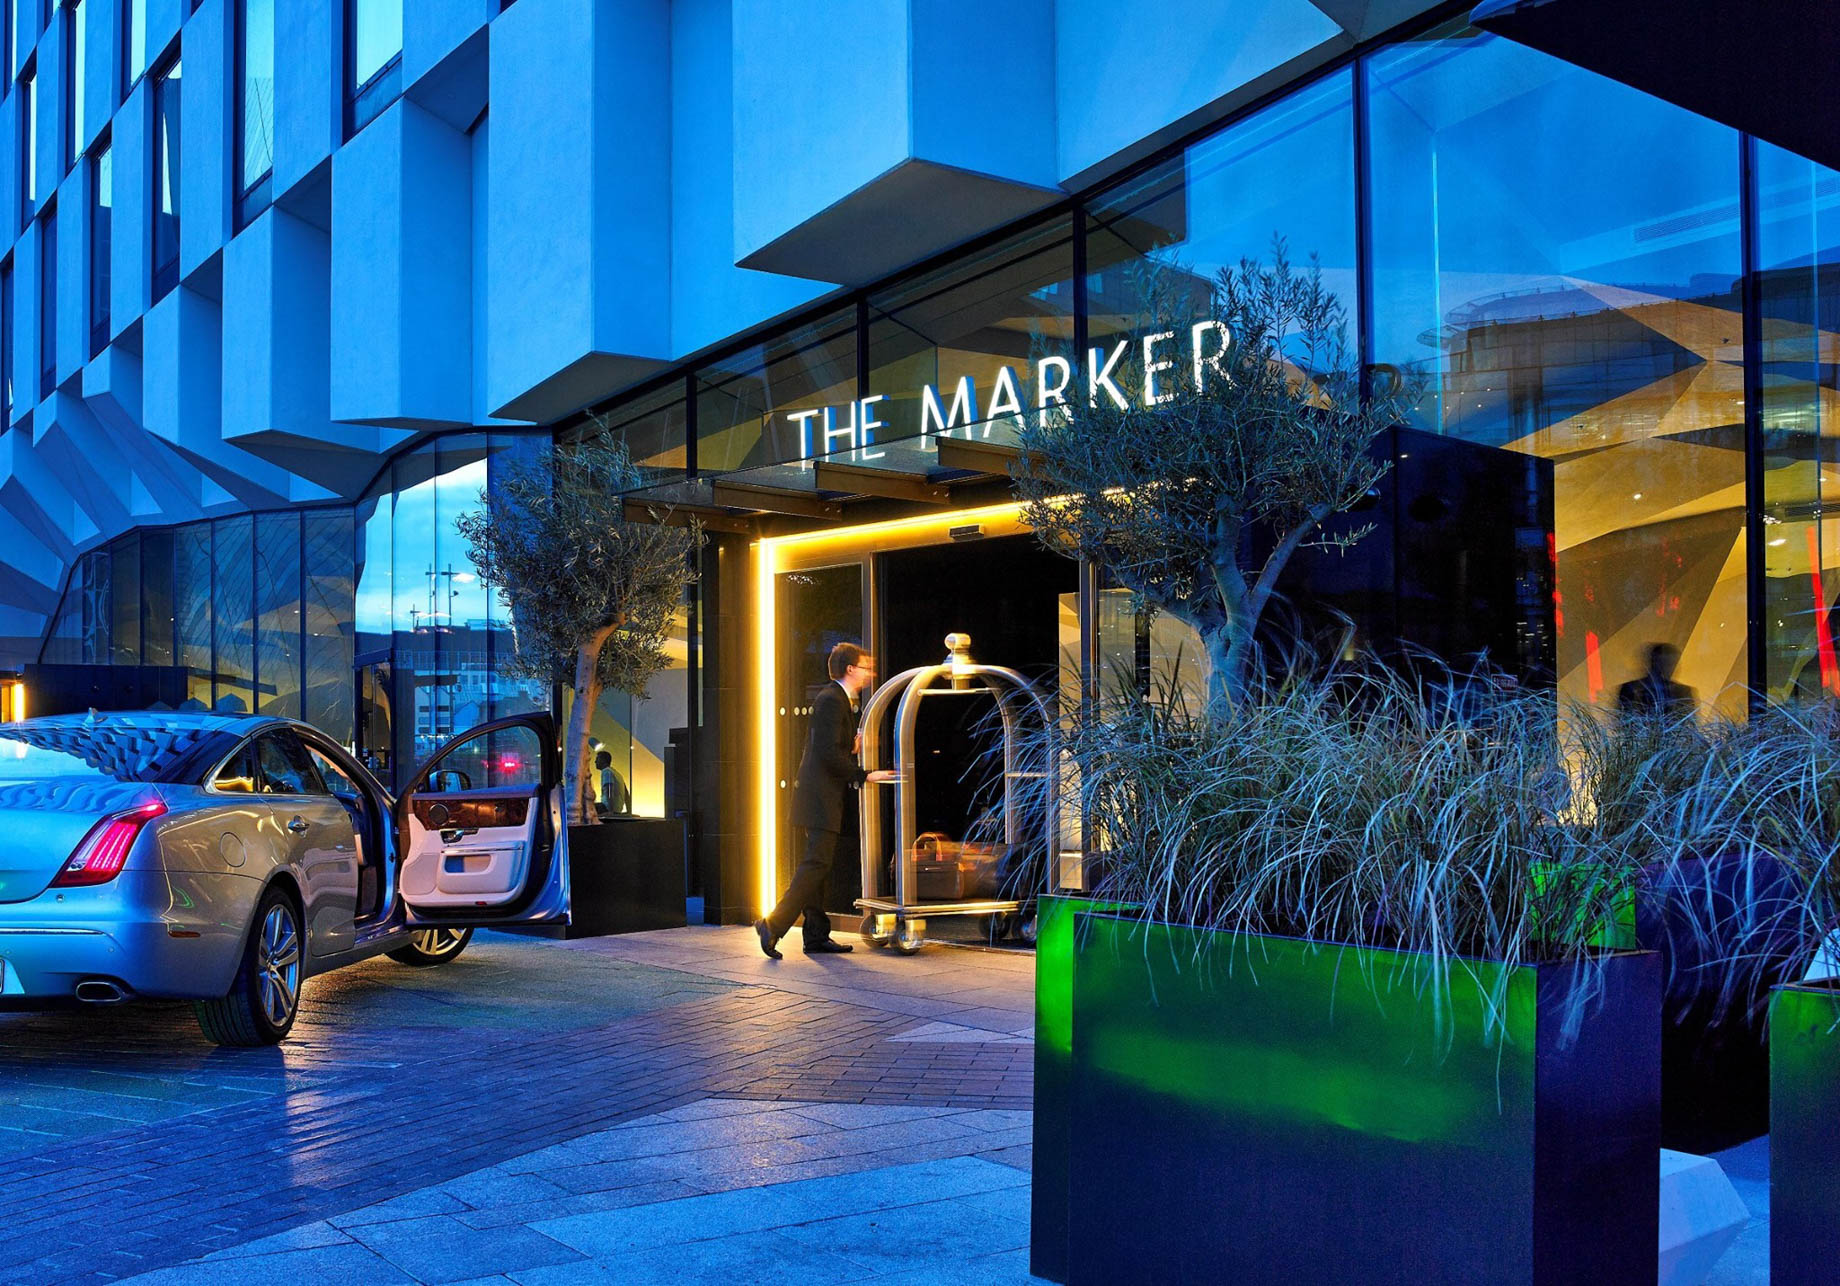 Anantara The Marker Dublin Hotel - Dublin, Ireland - Exterior Entrance